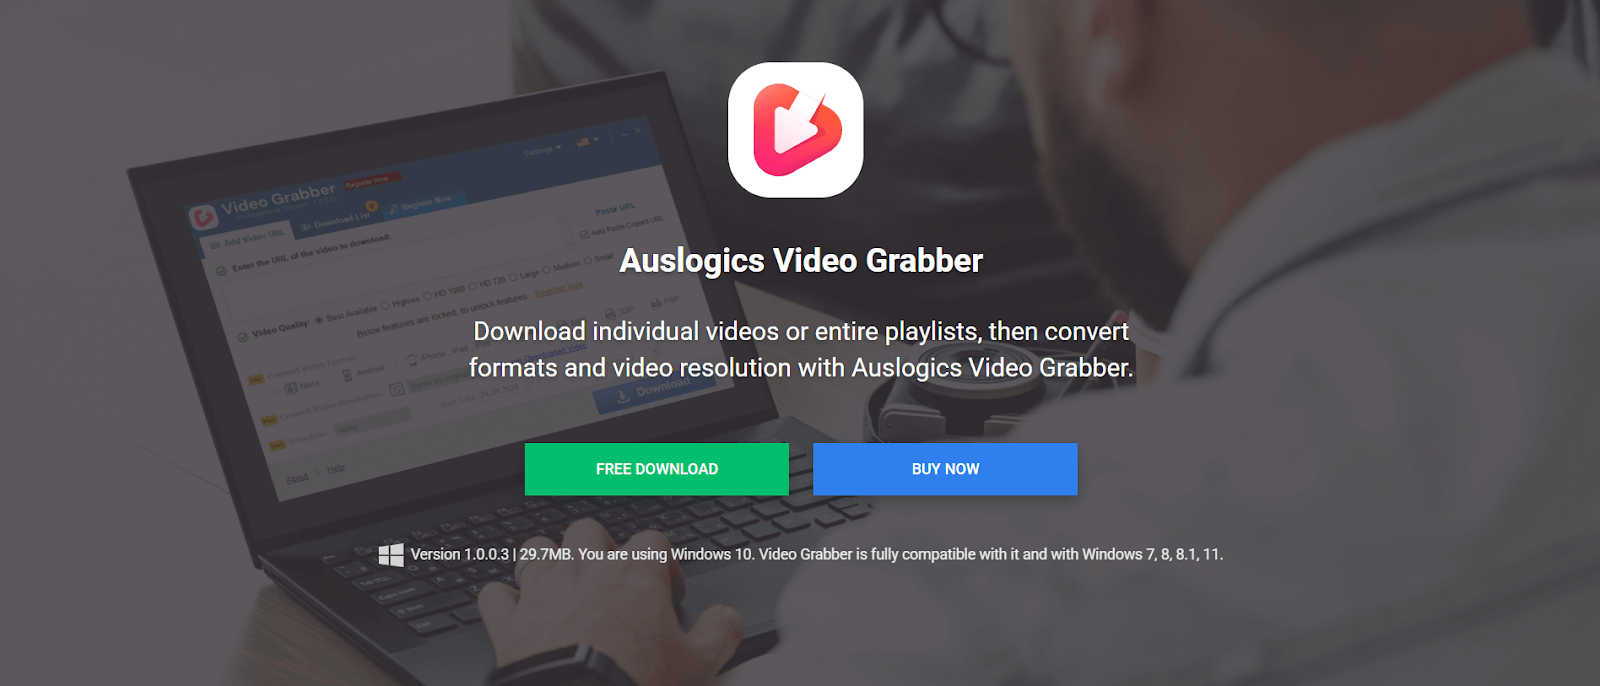 Auslogics Video Grabber Pro 1.0.0.4 download the last version for ios